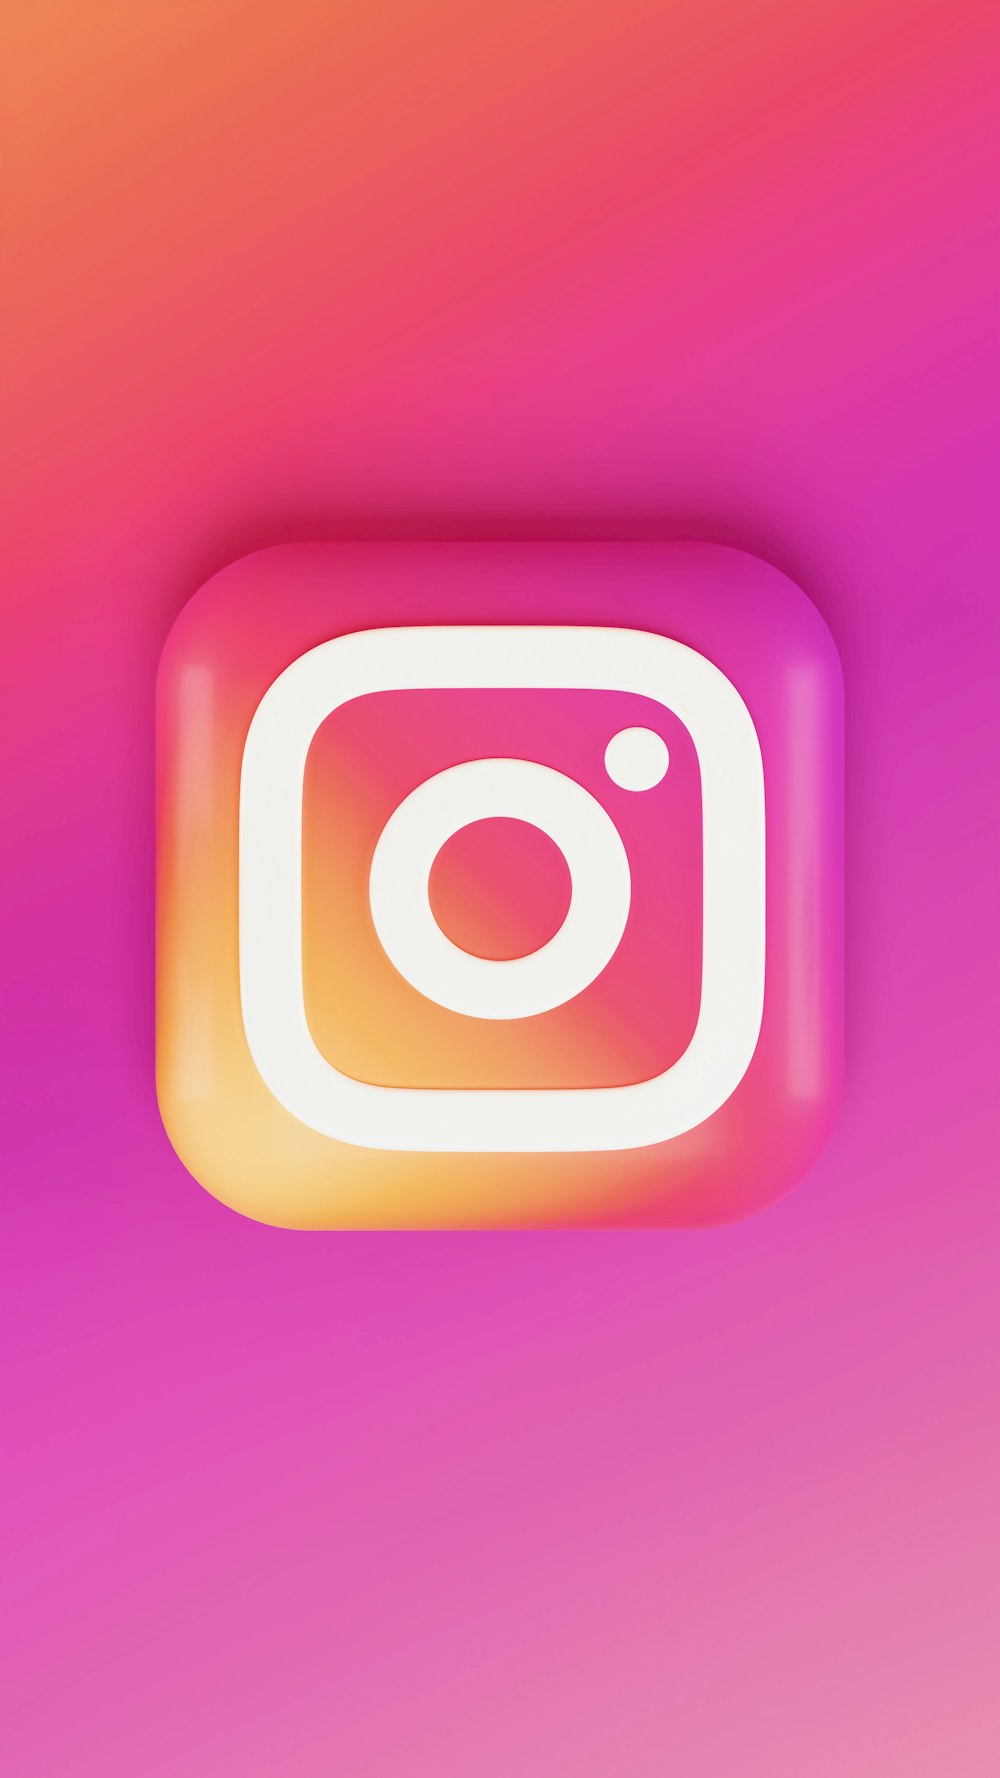 Instagram App Pictures | Download Free Images on Unsplash